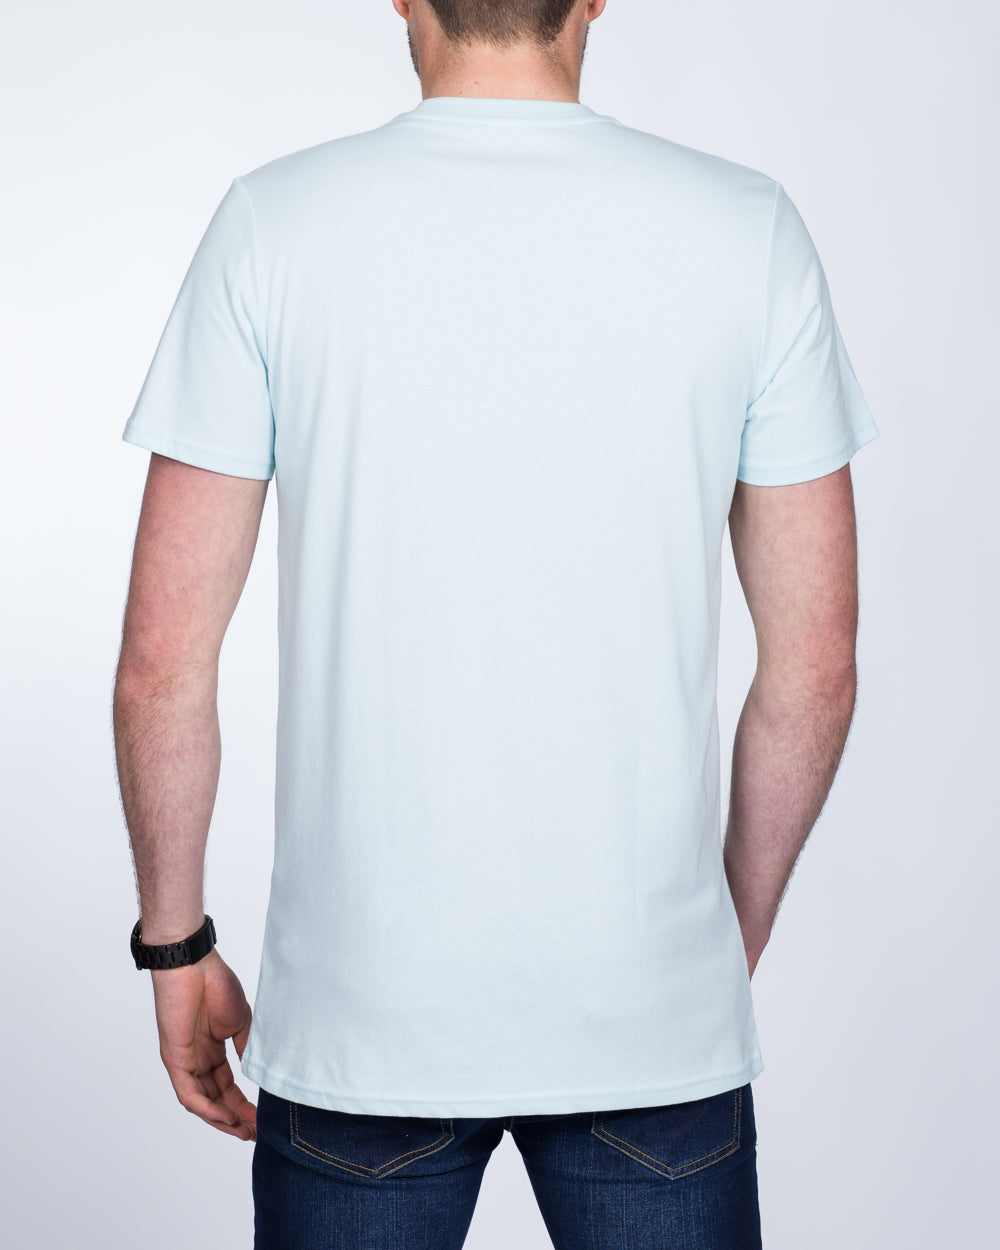 Girav Sydney Tall T-Shirt (light blue)